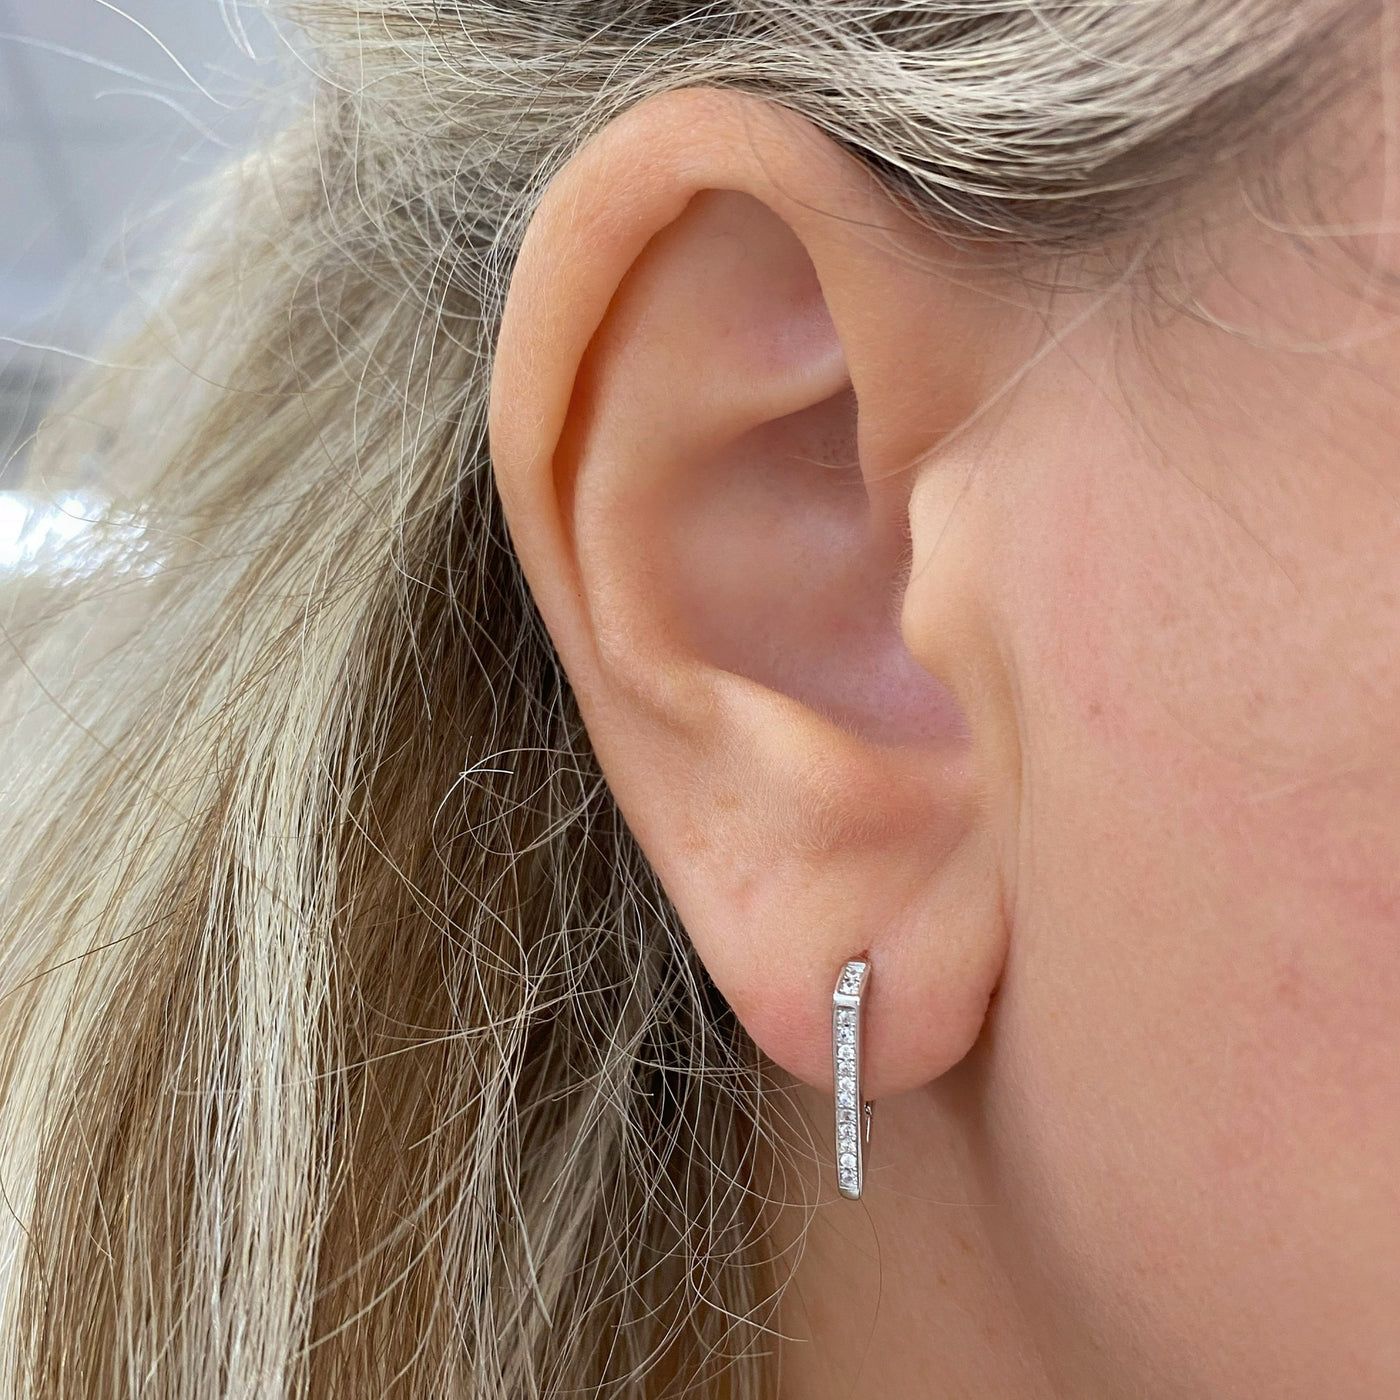 Silver triangle-shape earrings with zirconia - 12x18 mm